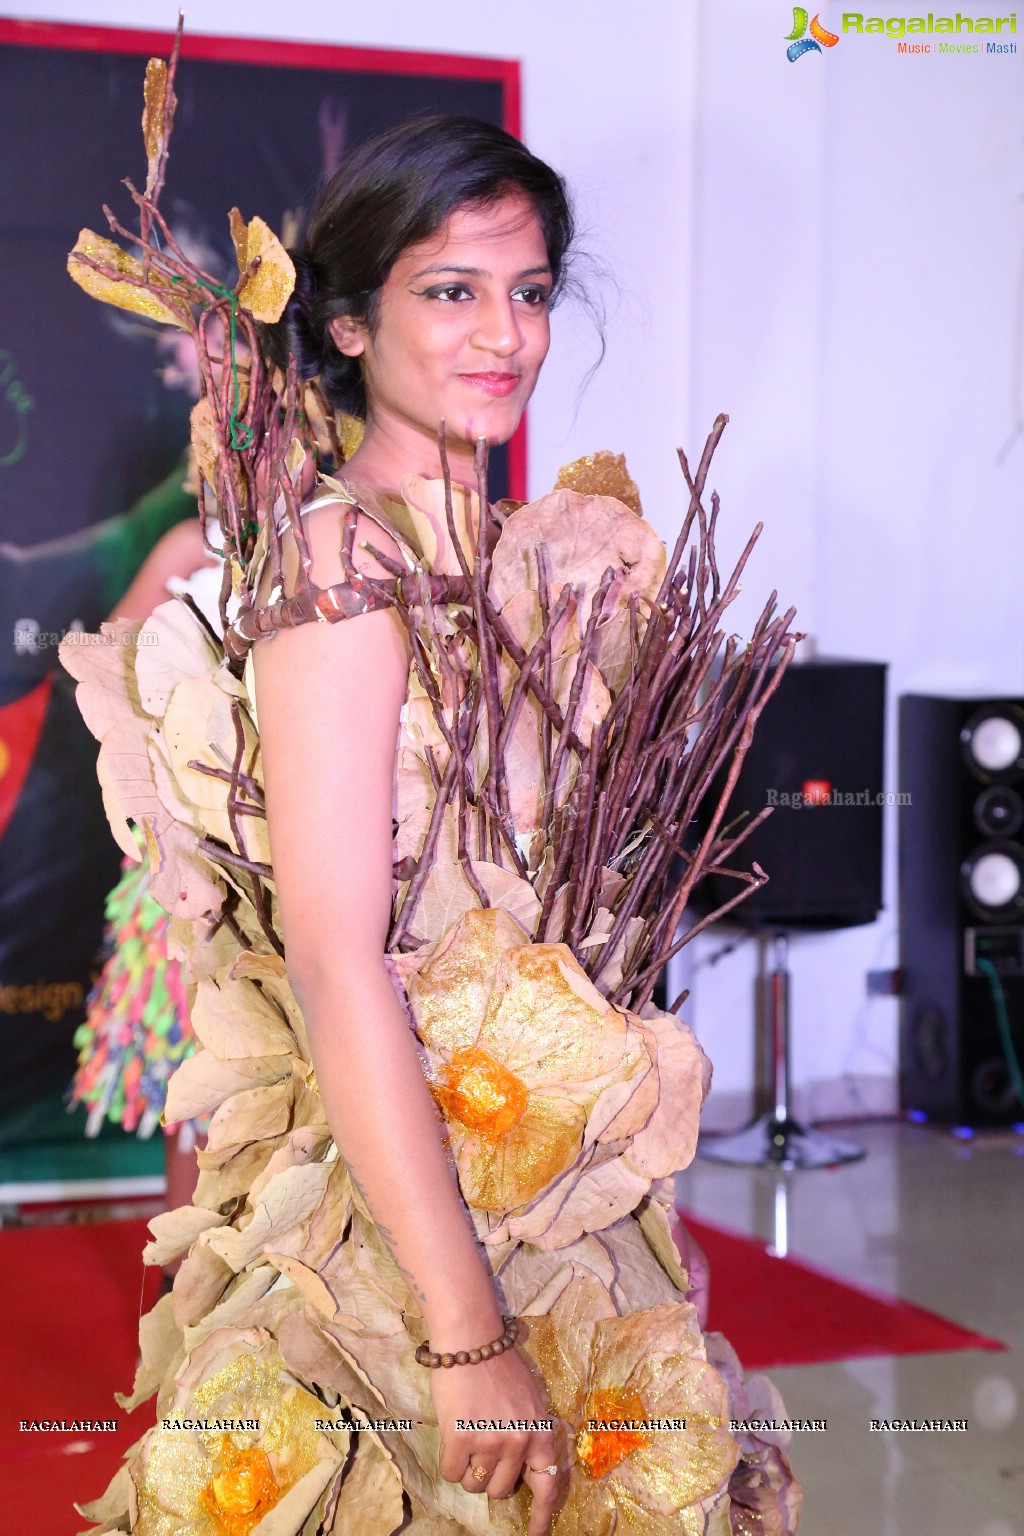 La Moda Futurista - Lakhotia Carnival 2017 Fashion Show at Lakhotia Institute, Banjara Hills, Hyderabad